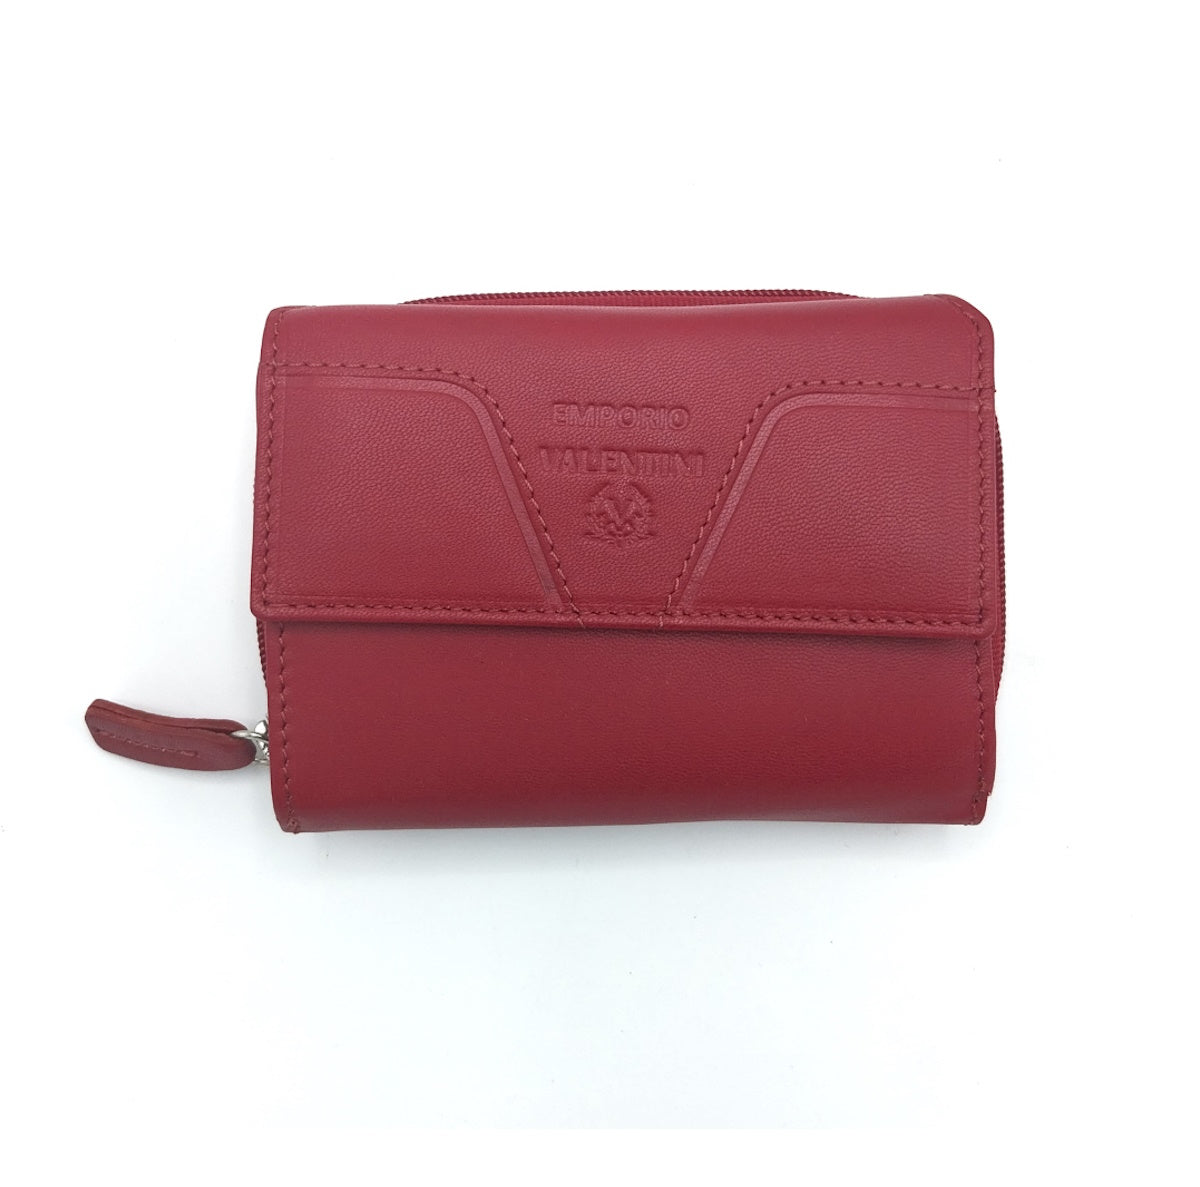 Genuine leather wallet, Emporio Valentini, for women, art. 7208